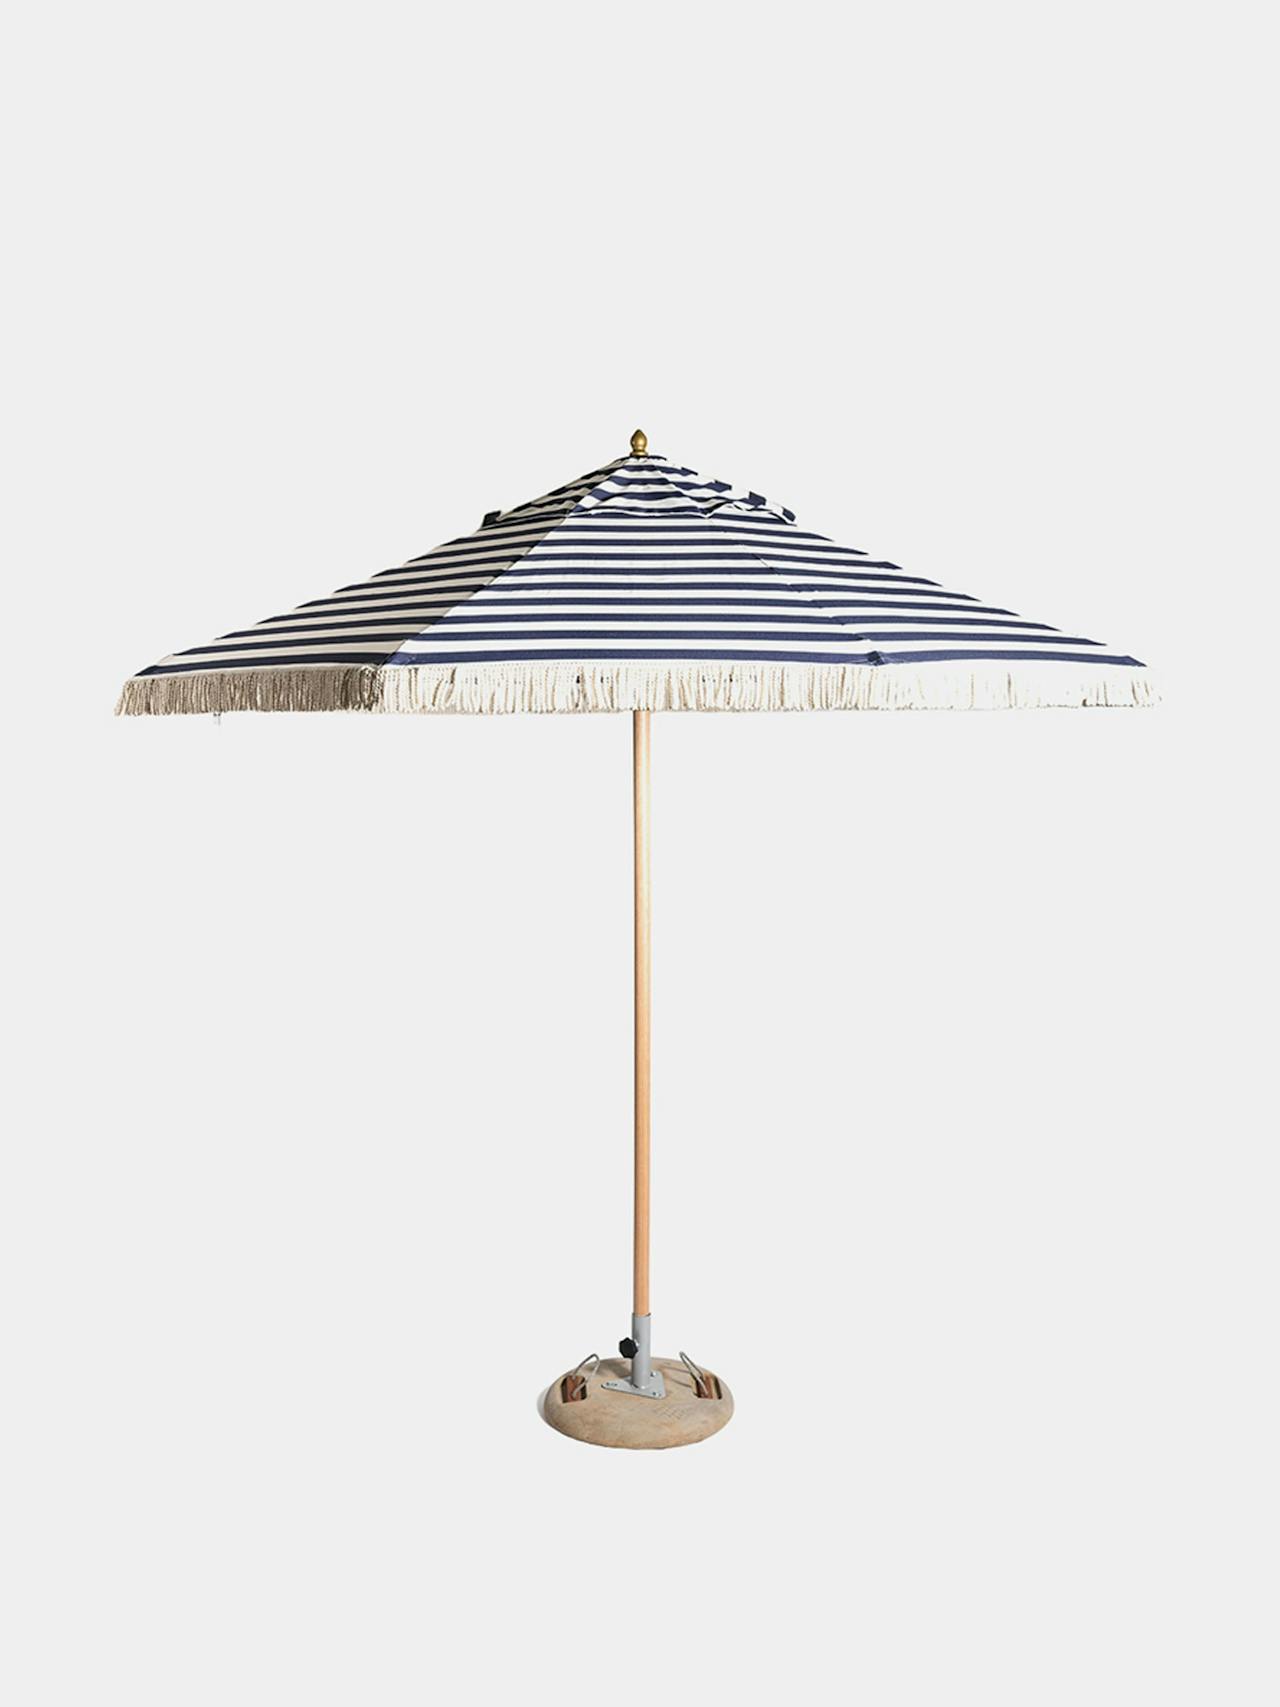 Sun parasol with tassels in navy stripe, 400cm